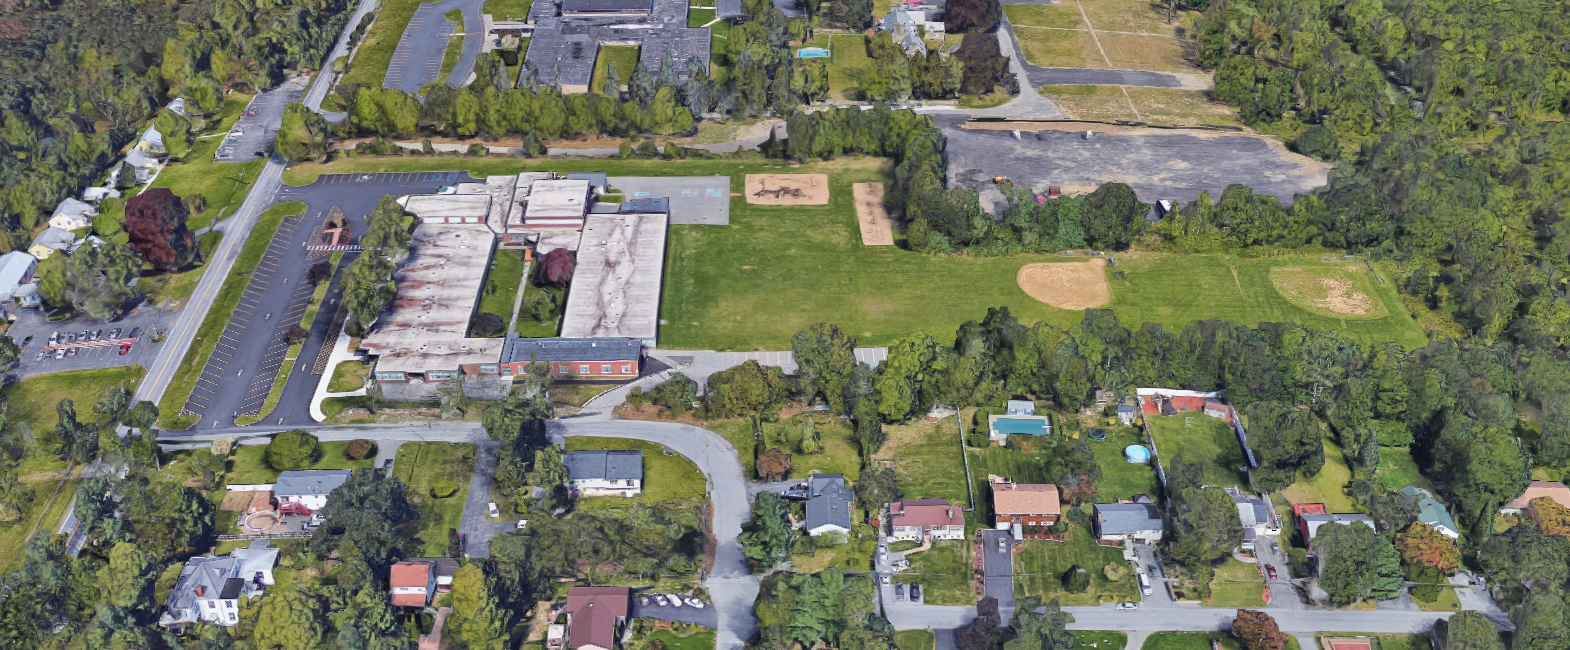 George Washington Elementary School in Mohegan Lake, New York